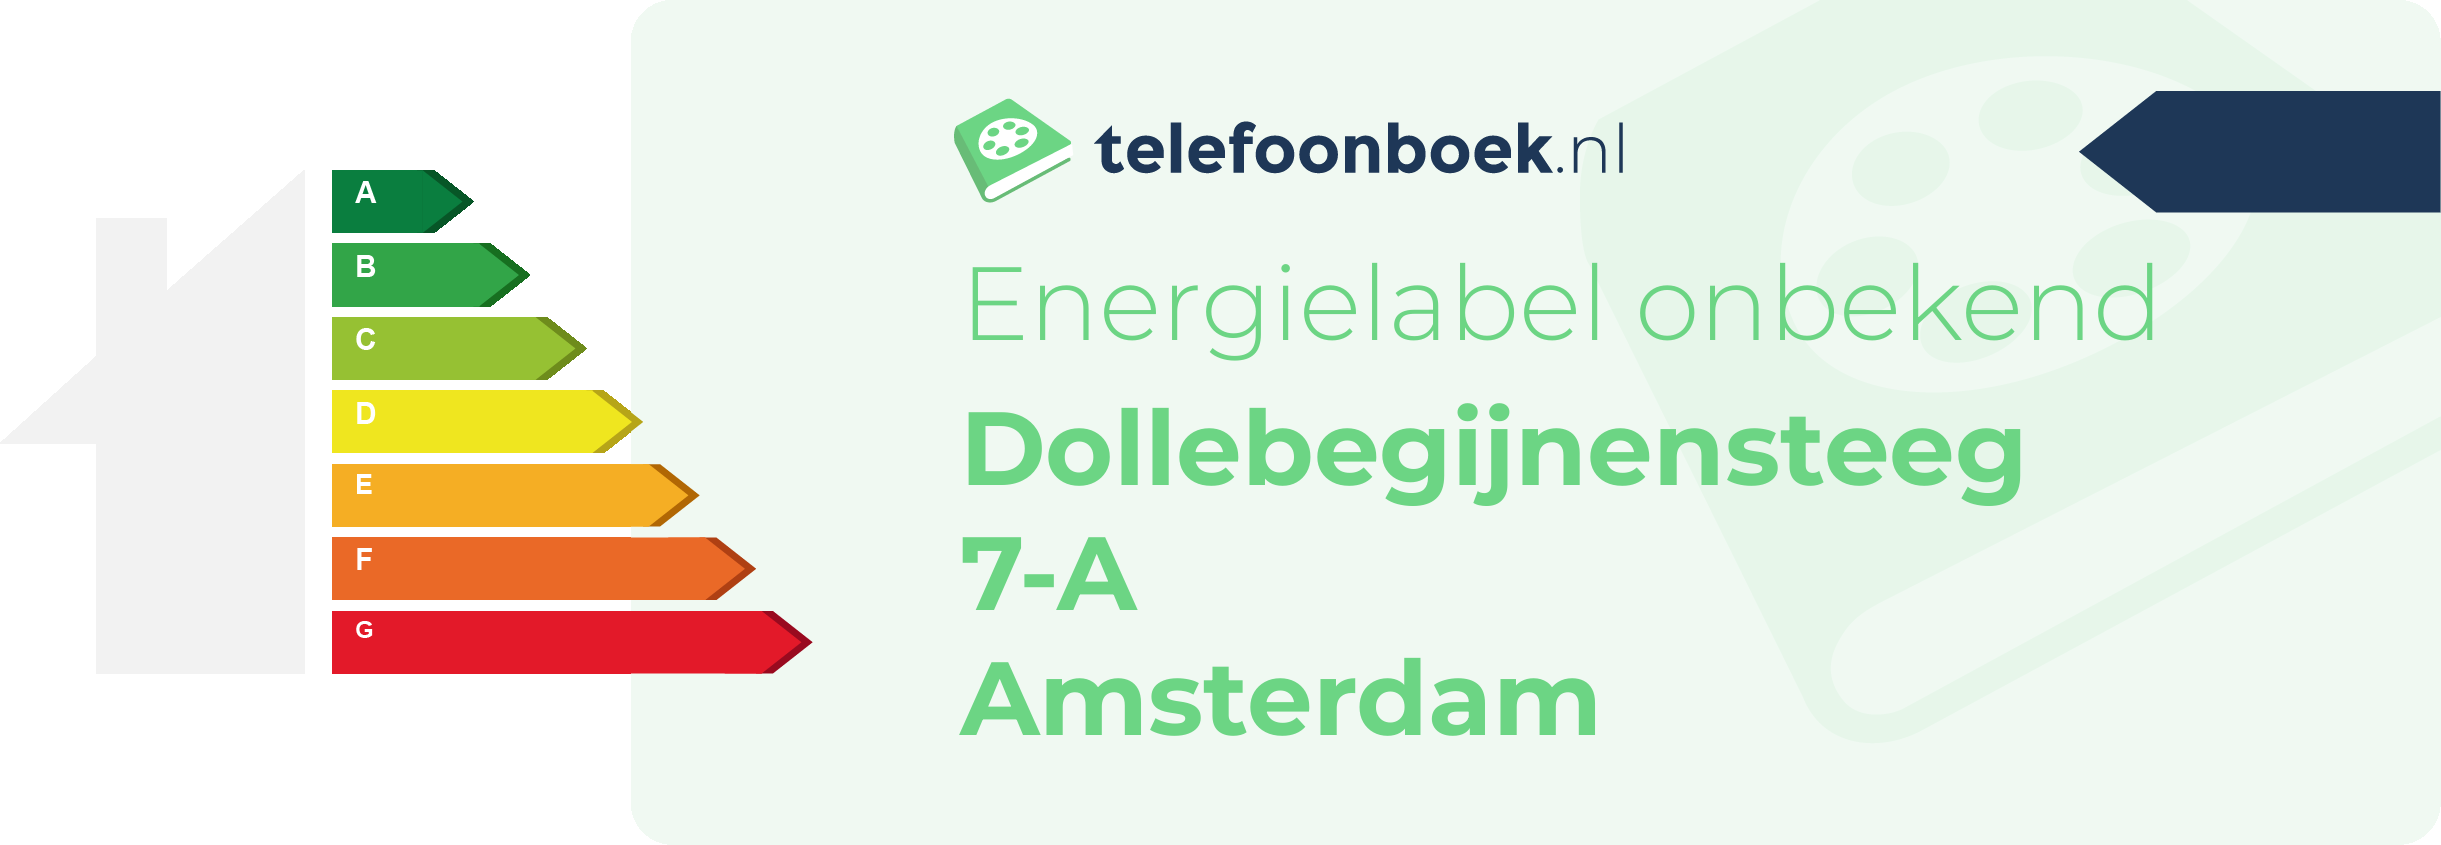 Energielabel Dollebegijnensteeg 7-A Amsterdam